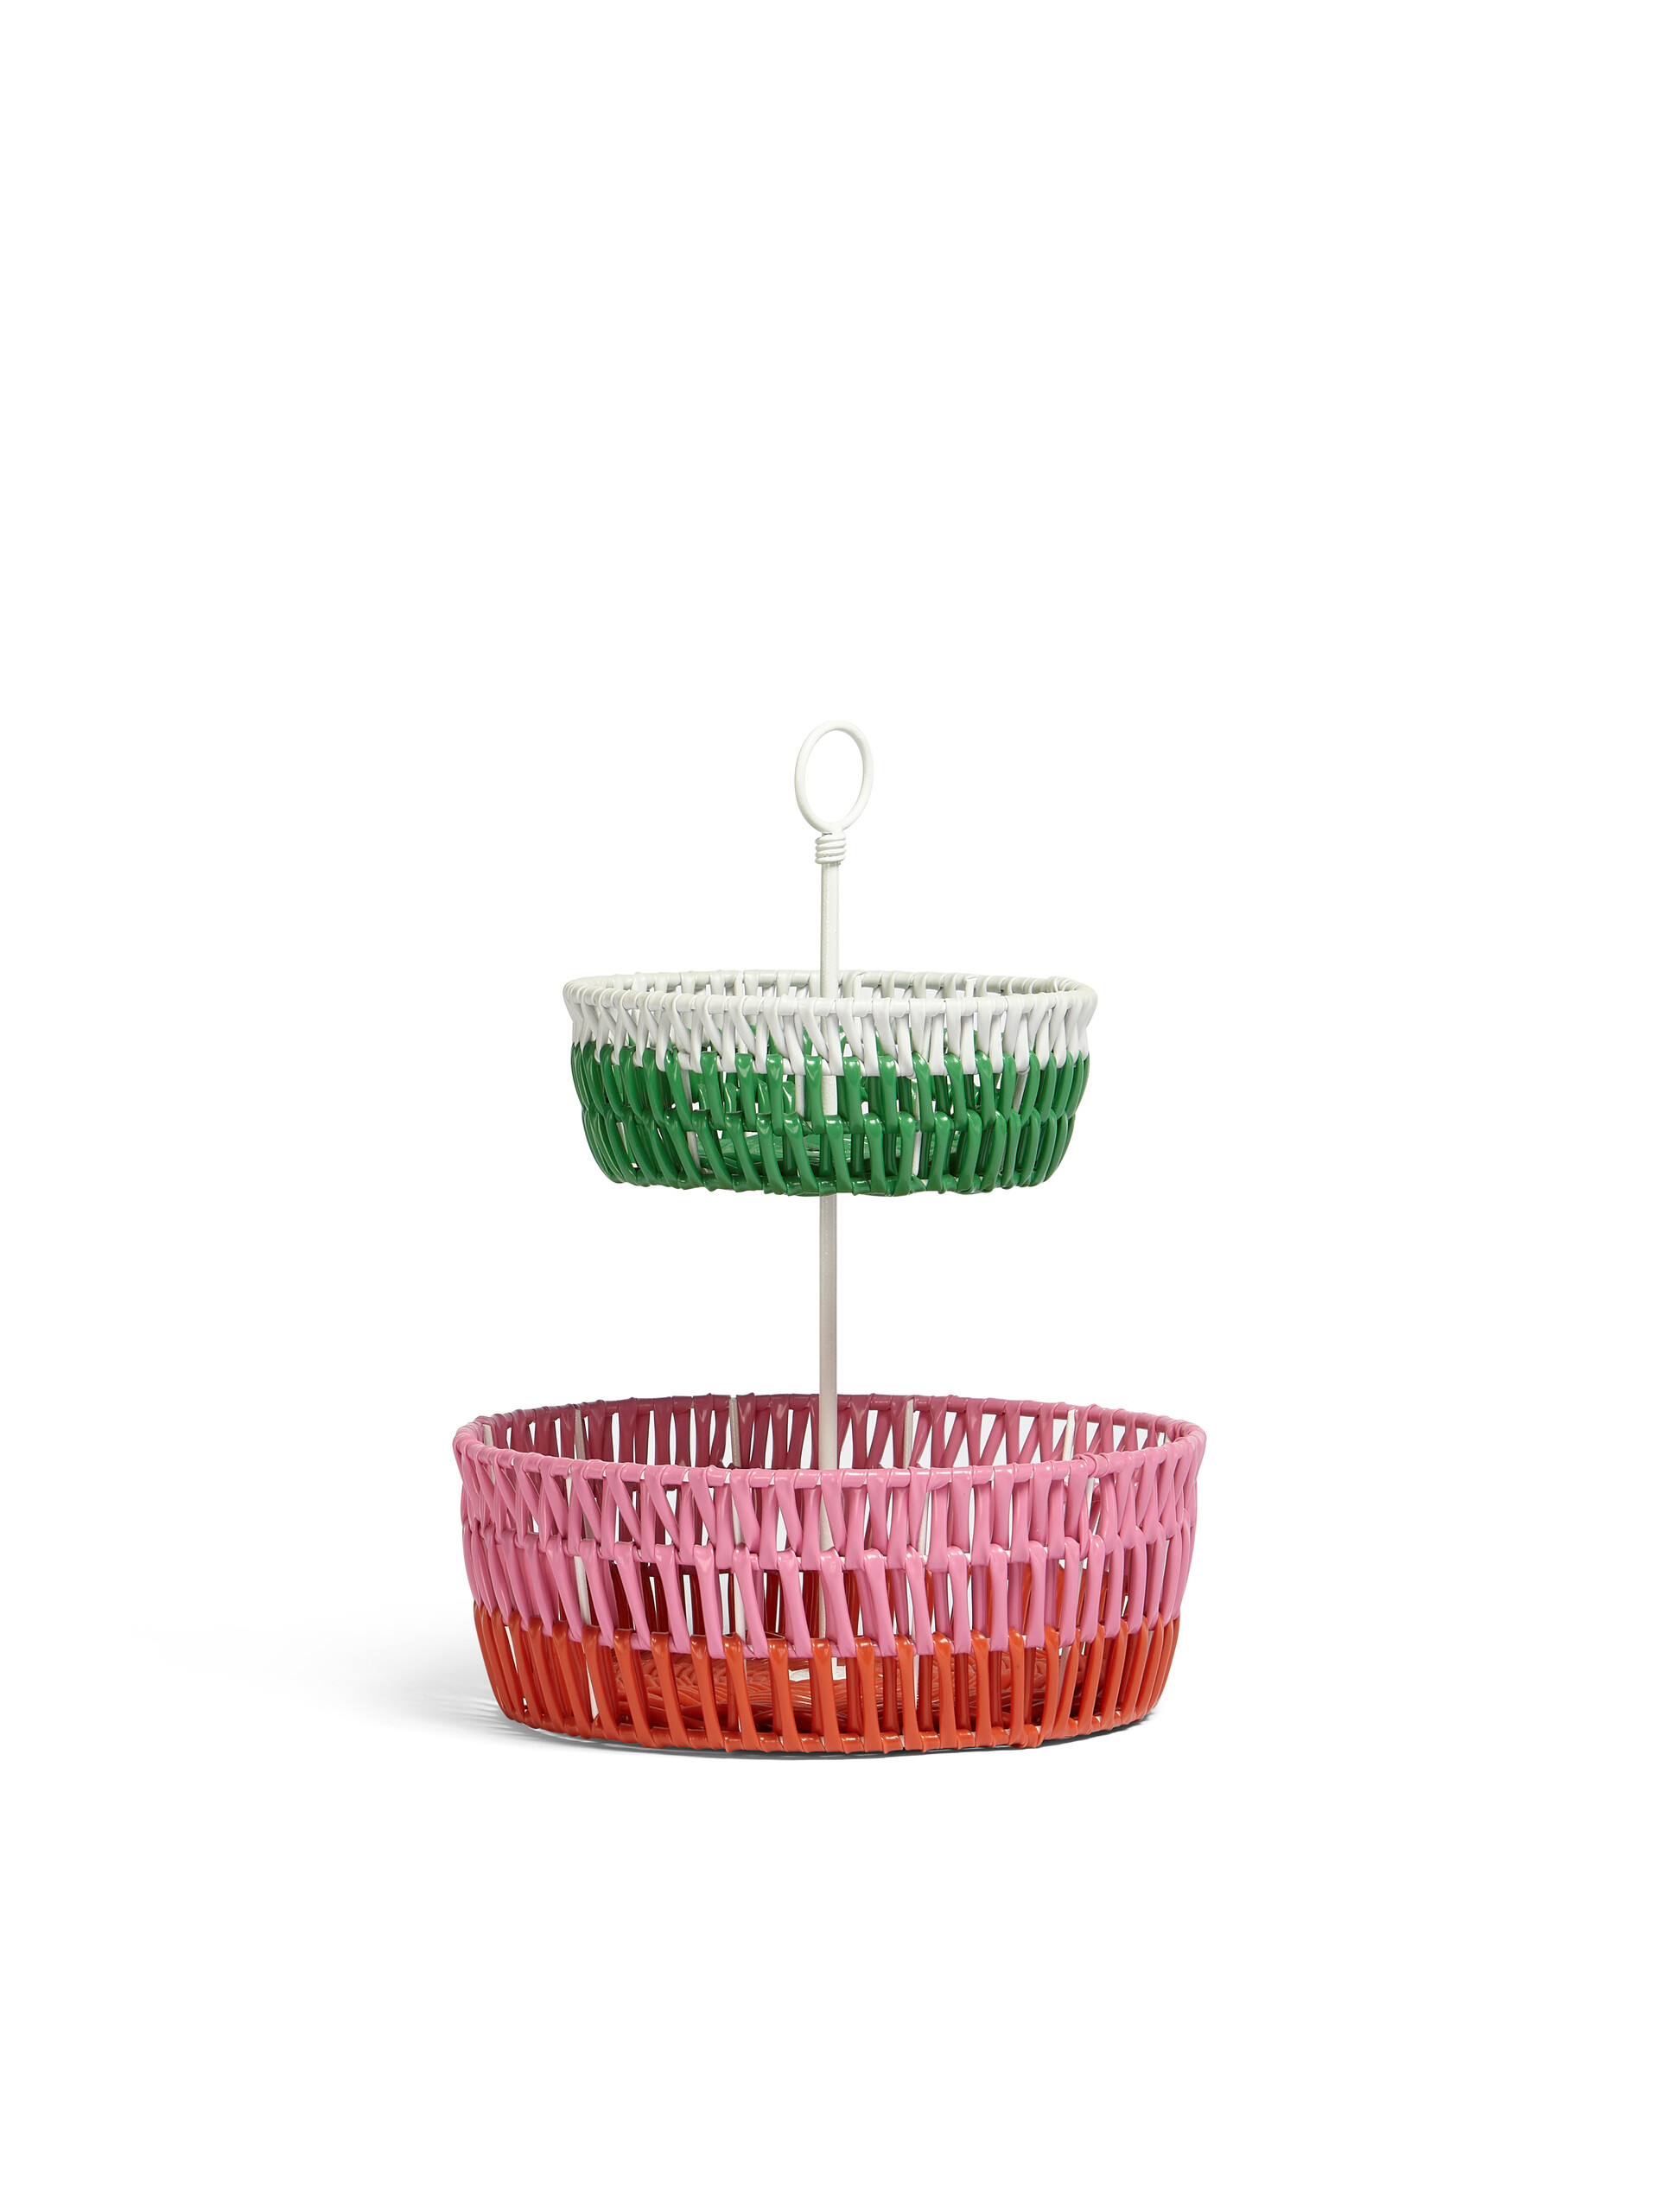 MARNI MARKET multicolor fruit basket - Accessories - Image 2